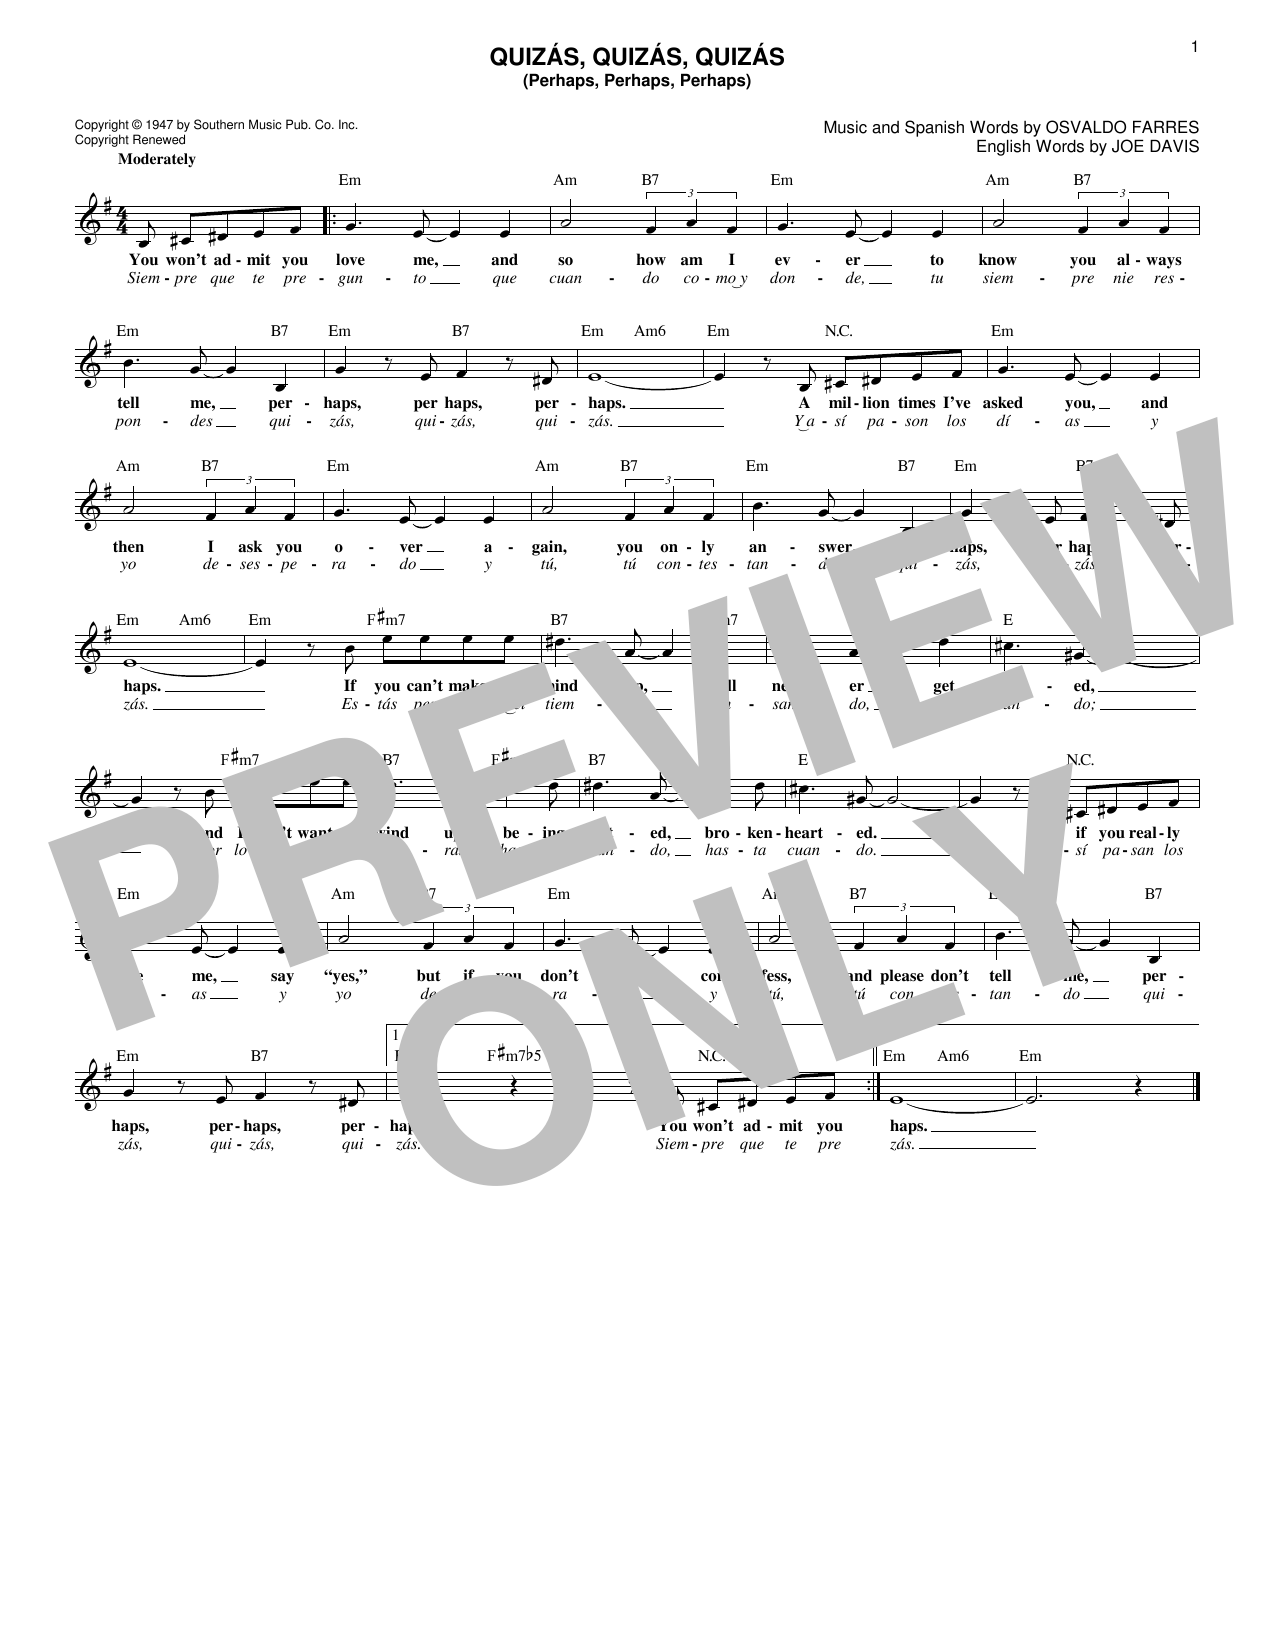 Download Joe Davis Quizás, Quizás, Quizás (Perhaps, Perhaps, Perhaps) Sheet Music and learn how to play Melody Line, Lyrics & Chords PDF digital score in minutes